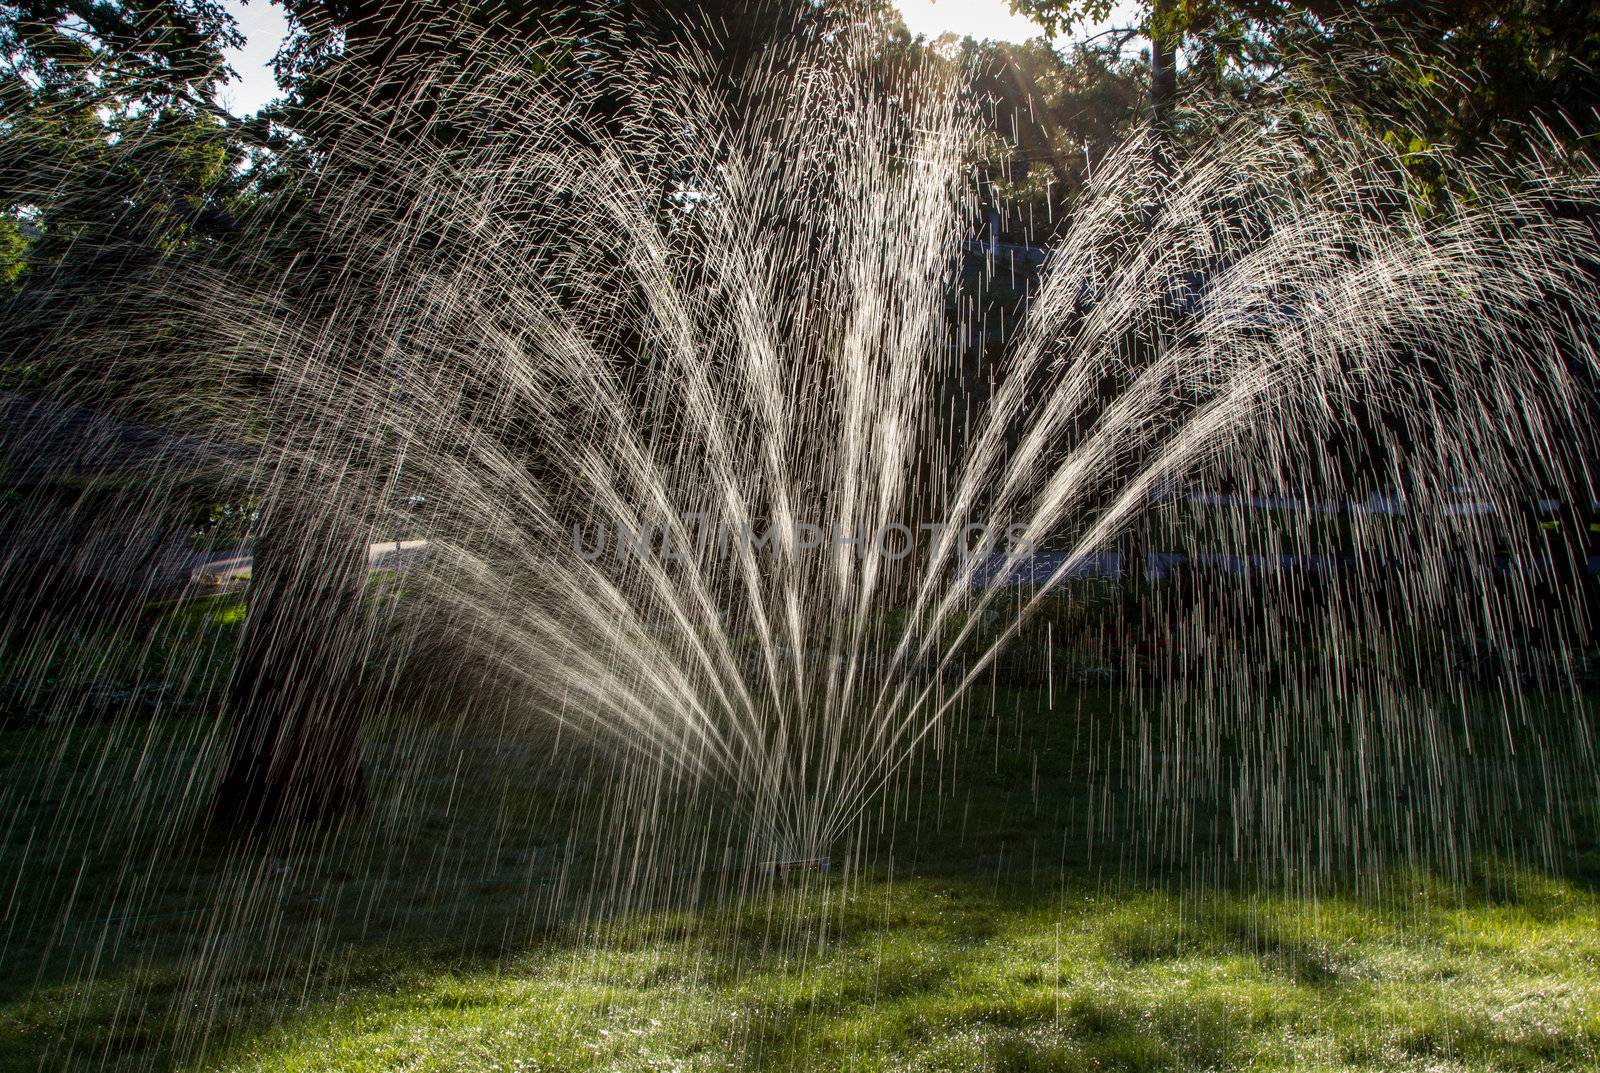 Lawn Sprinkler by wolterk